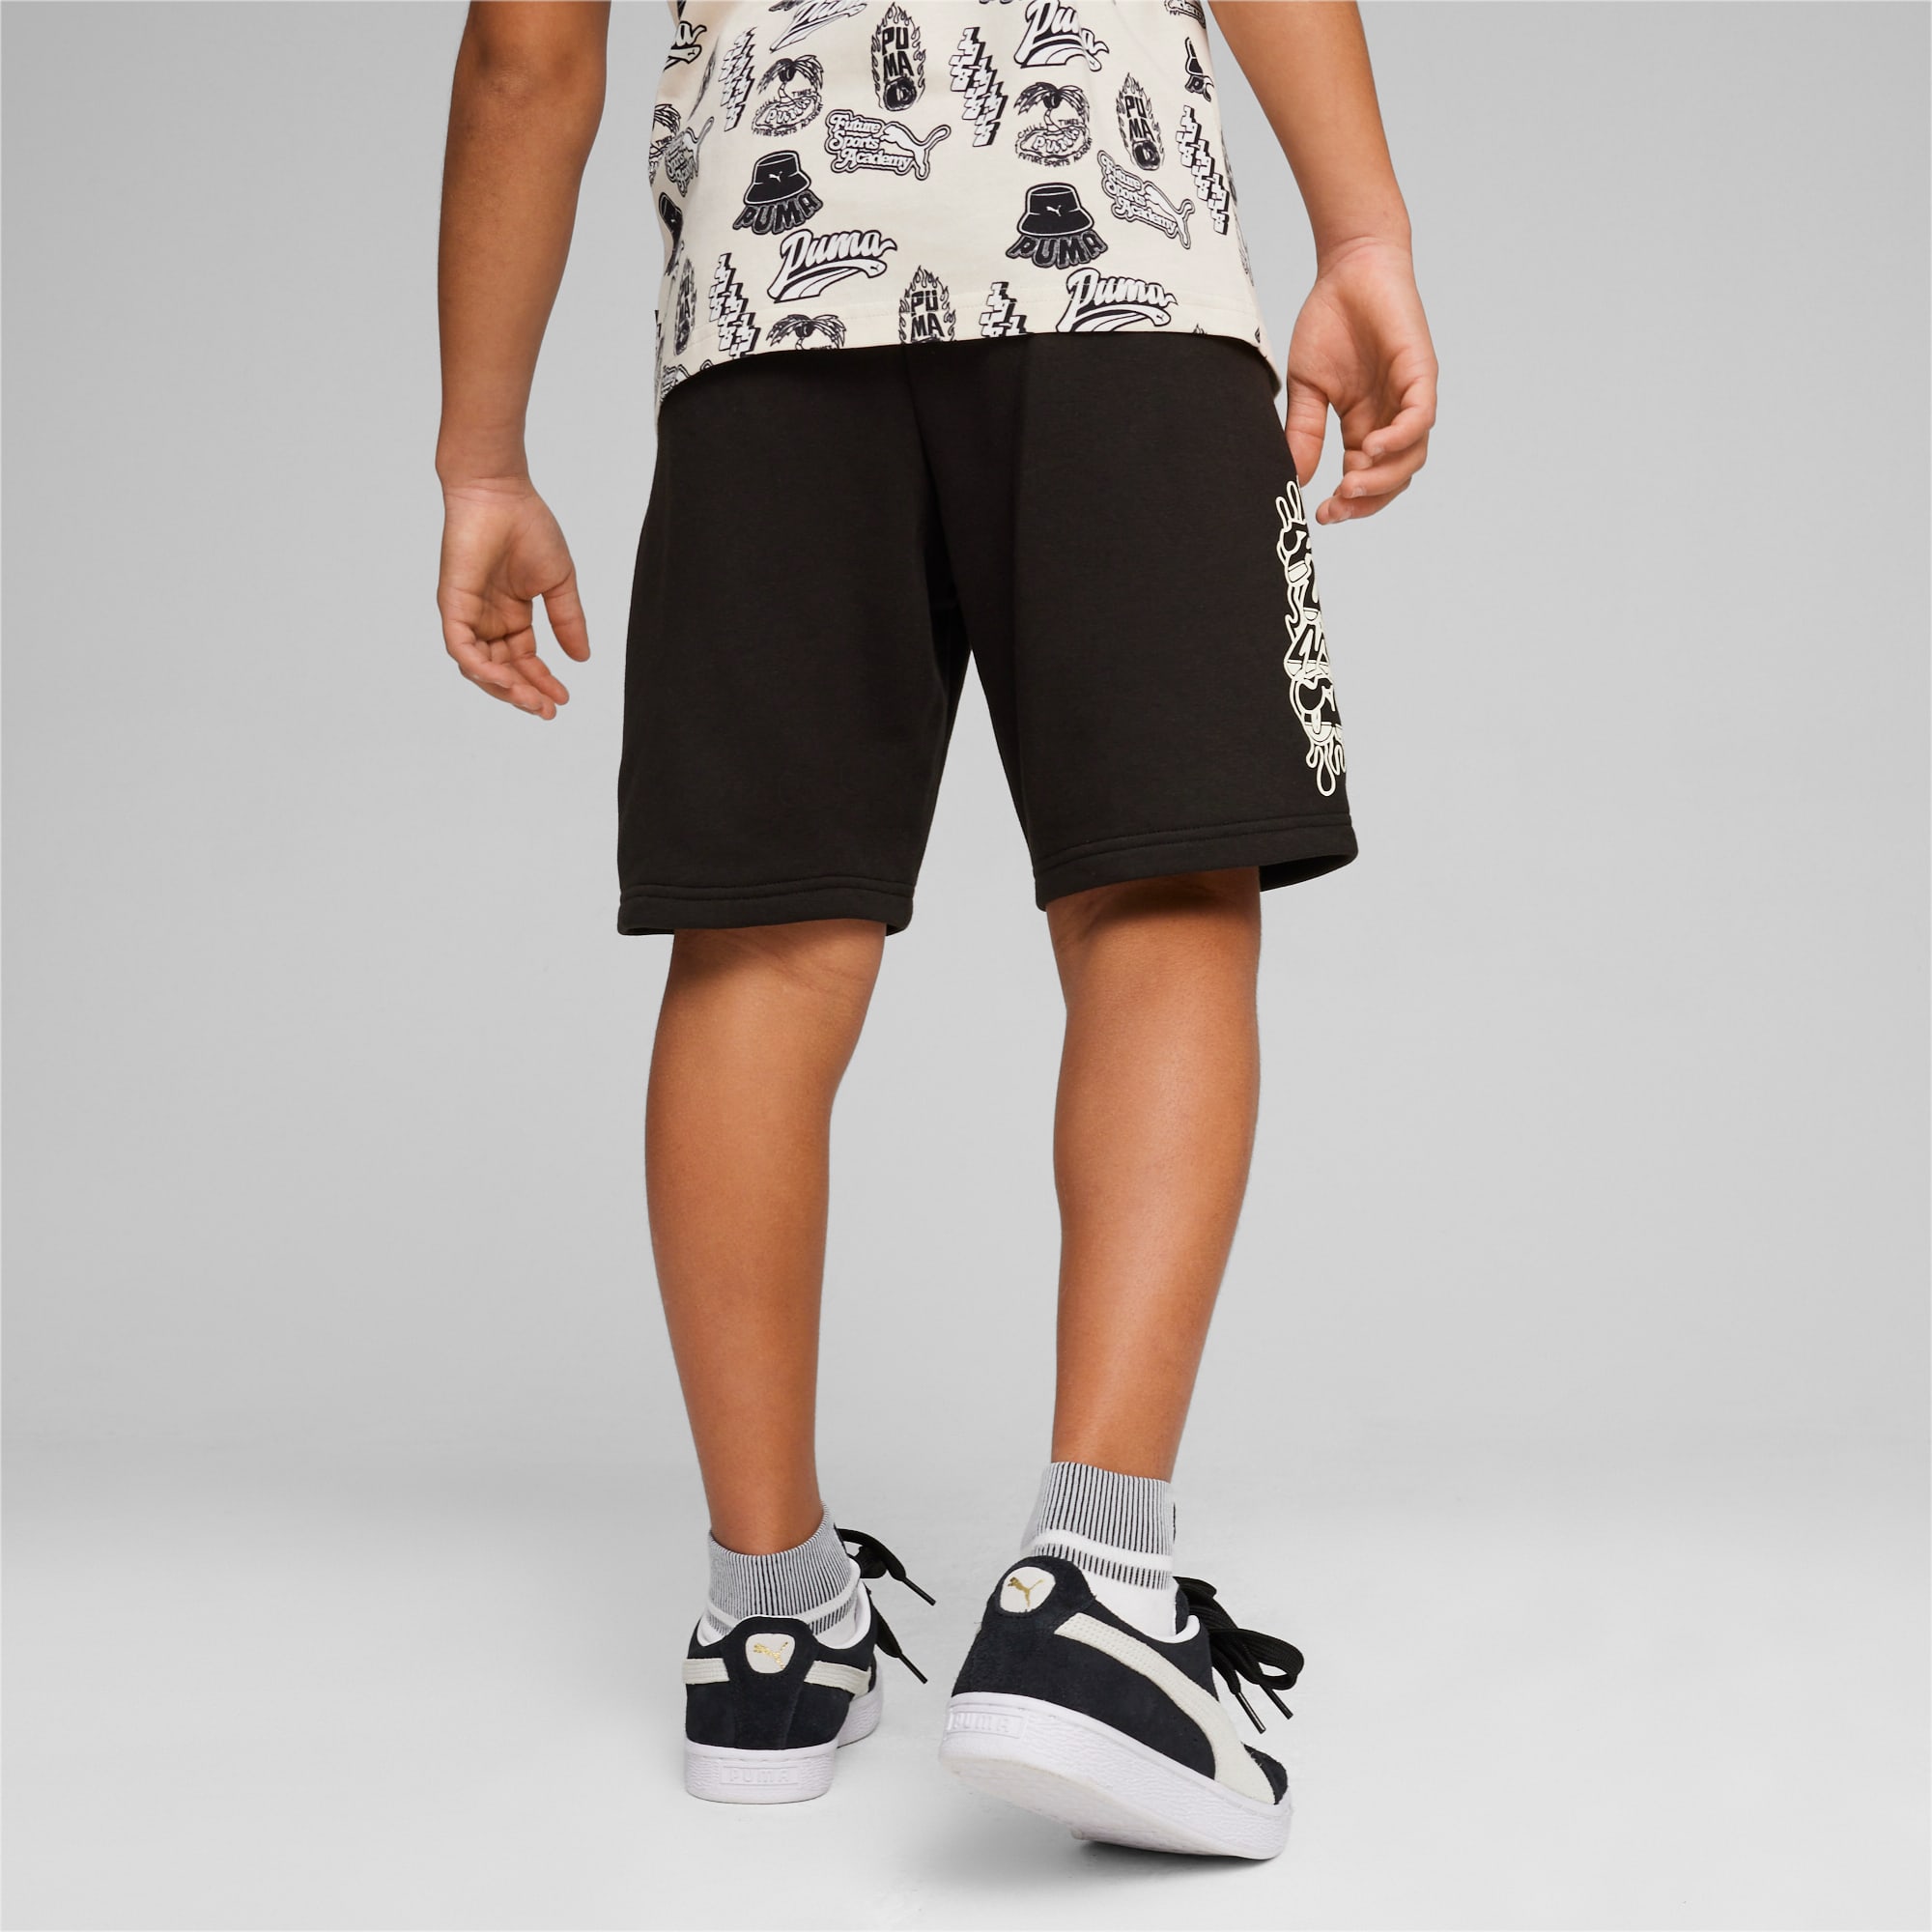 PUMA Ess+ Mid 90S Youth Shorts, Black, Size 128, Clothing